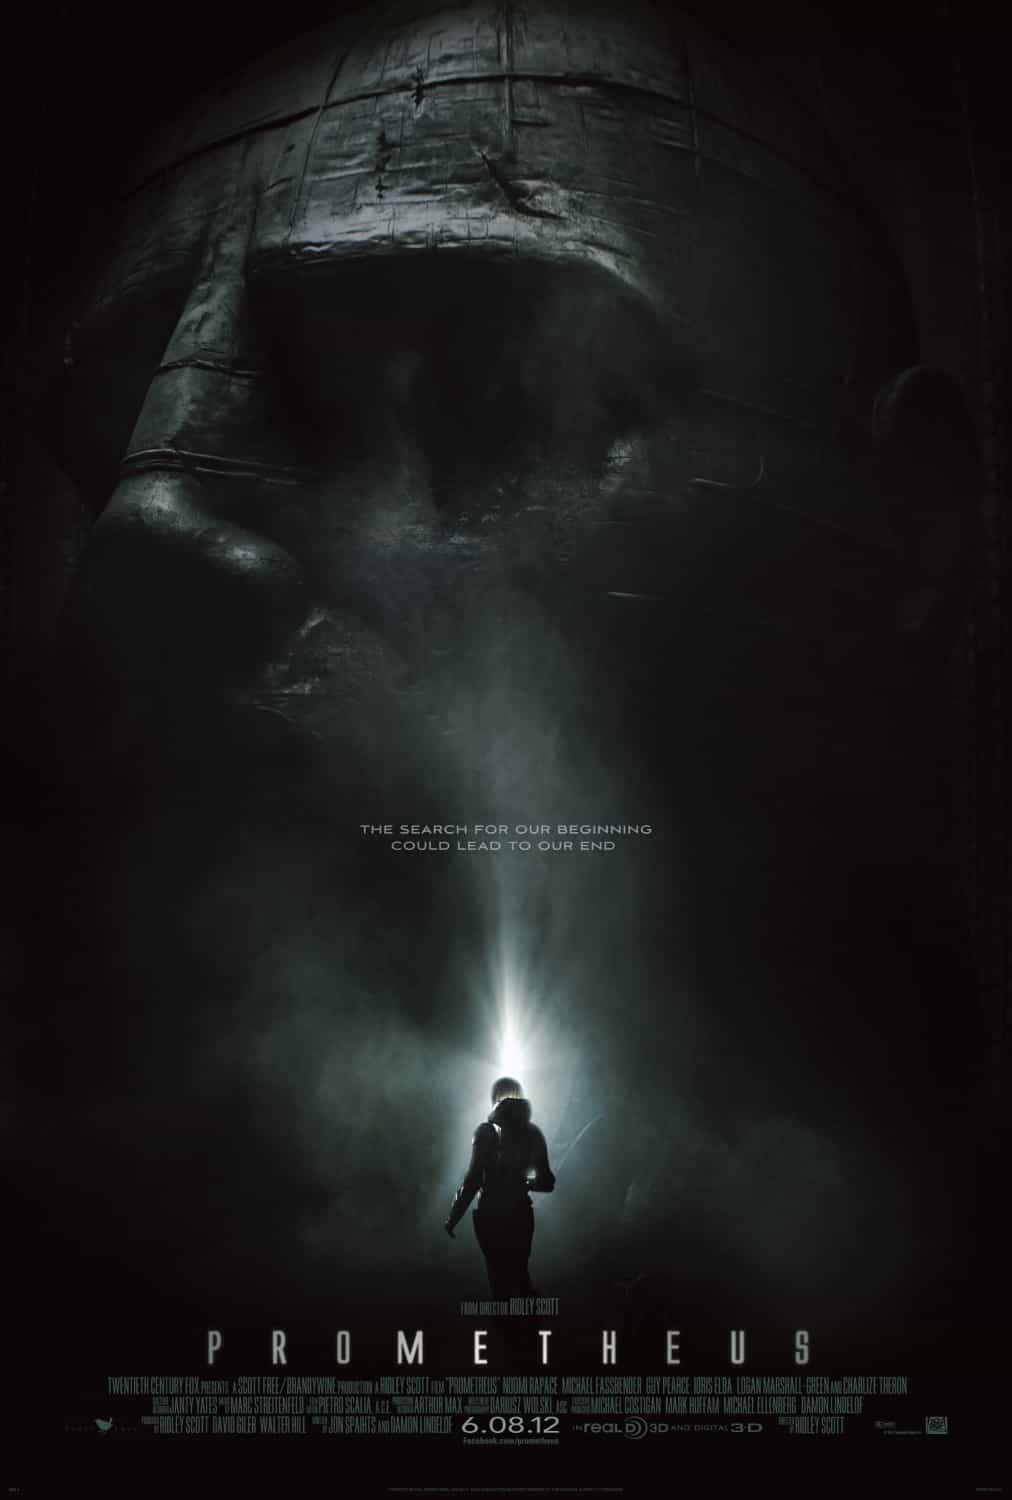 Prometheus trailer arrives, Alien anyone